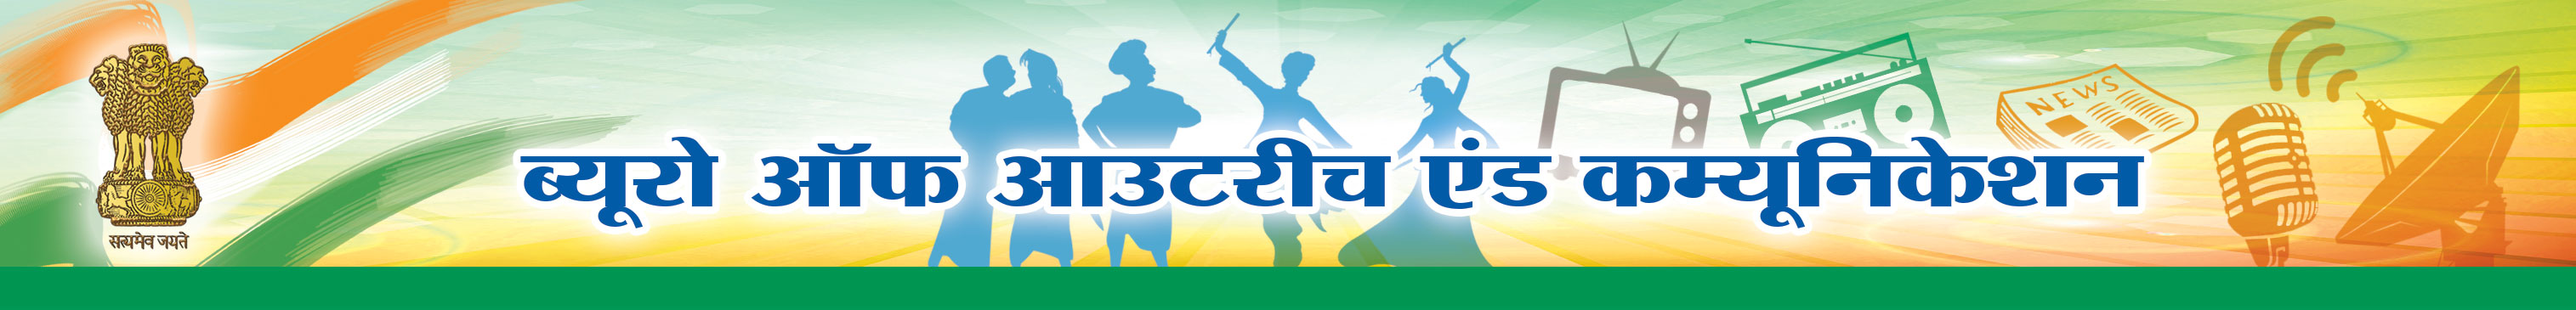 DAVP Hindi Banner